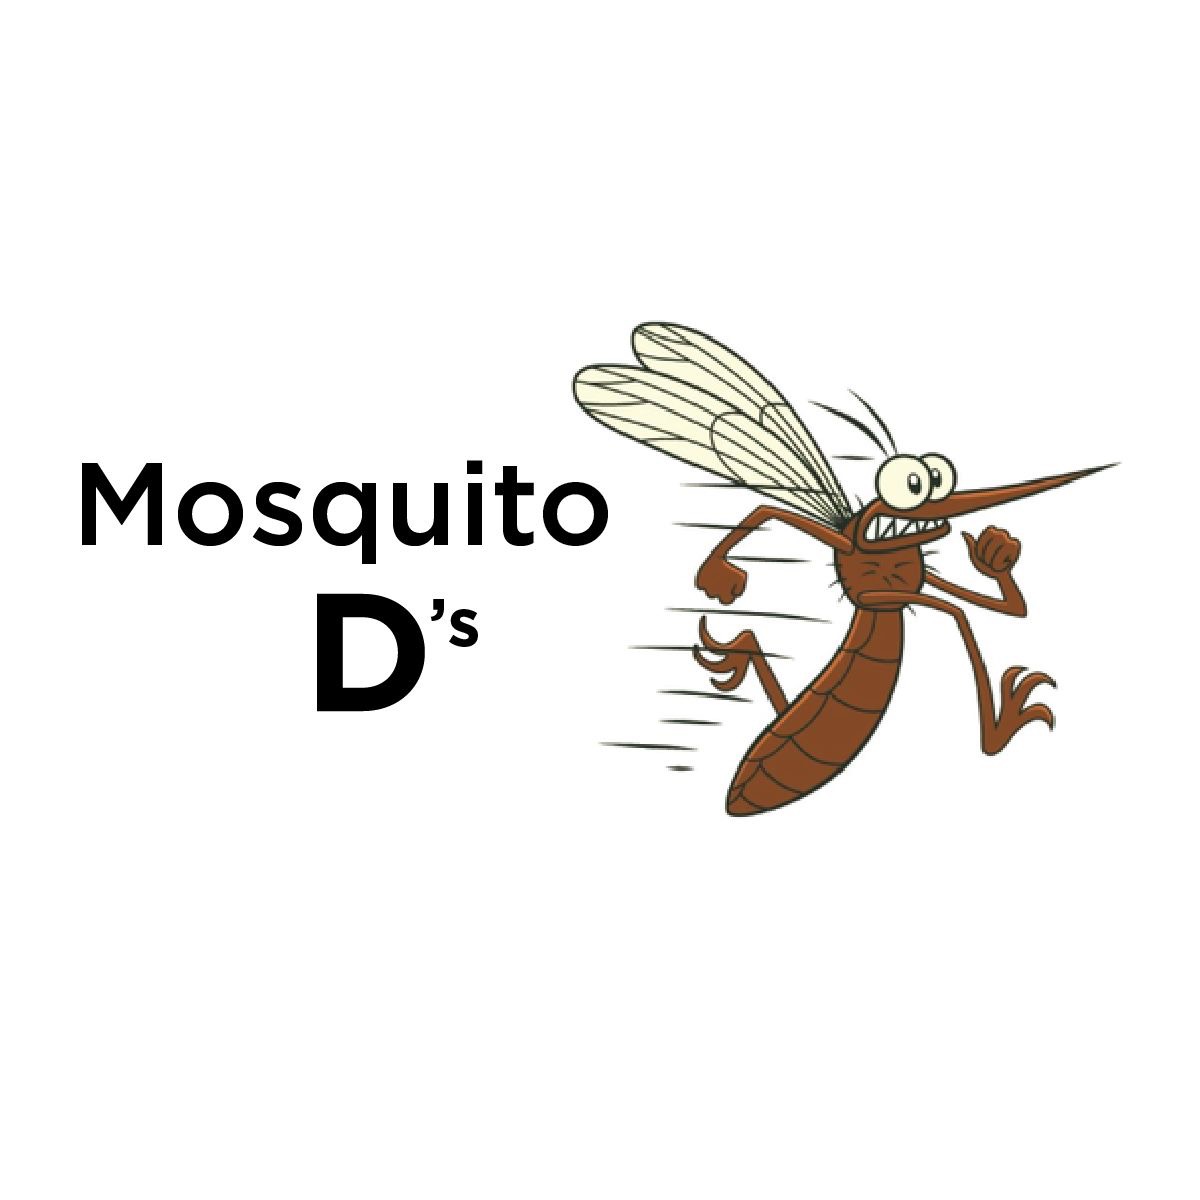 Mosquito D’s